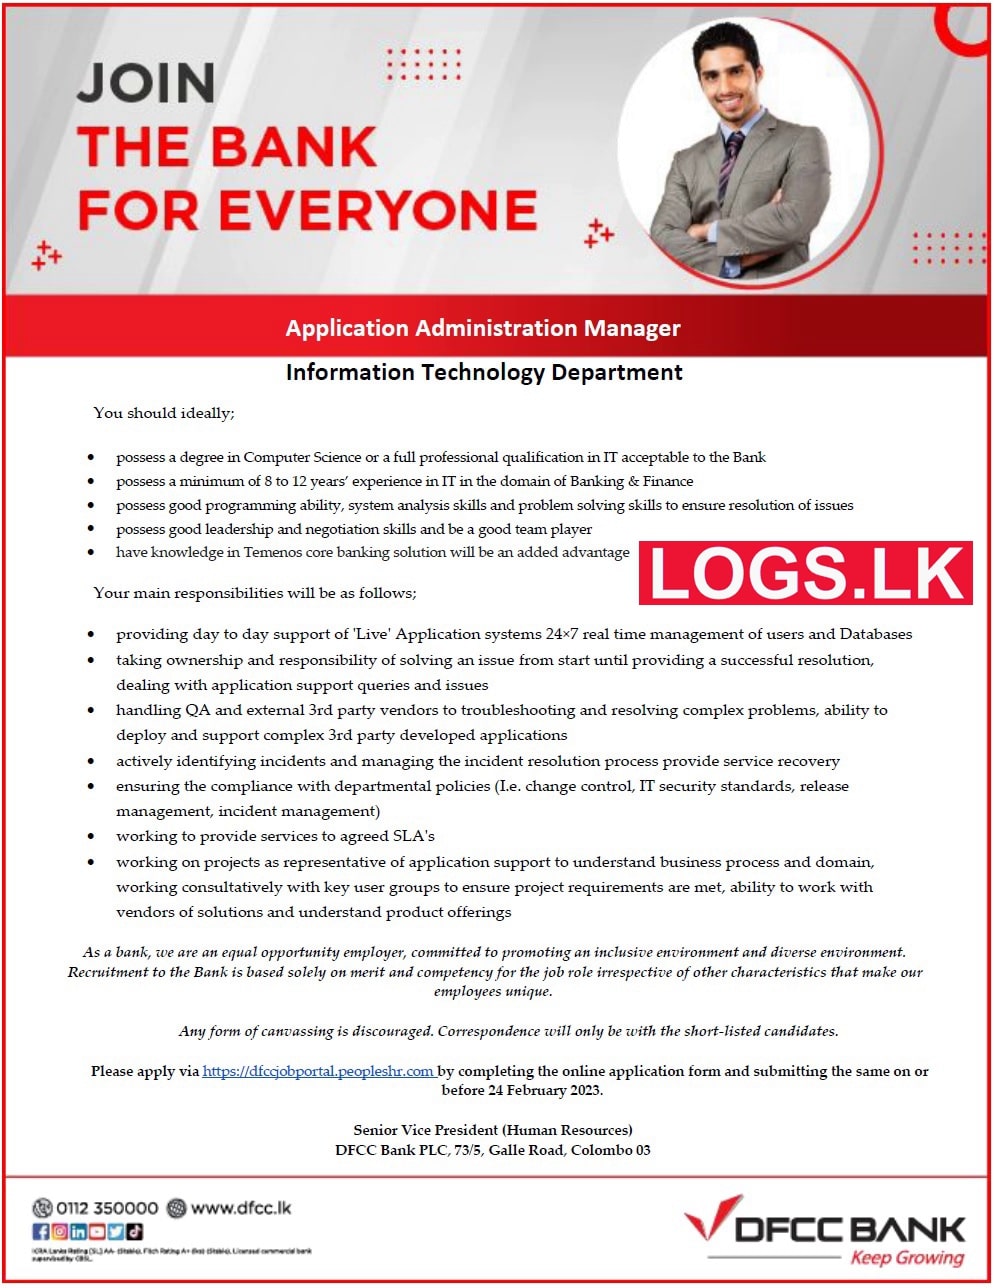 Application Administration Manager Vacancy at DFCC Bank Sri Lanka Job Apply Online